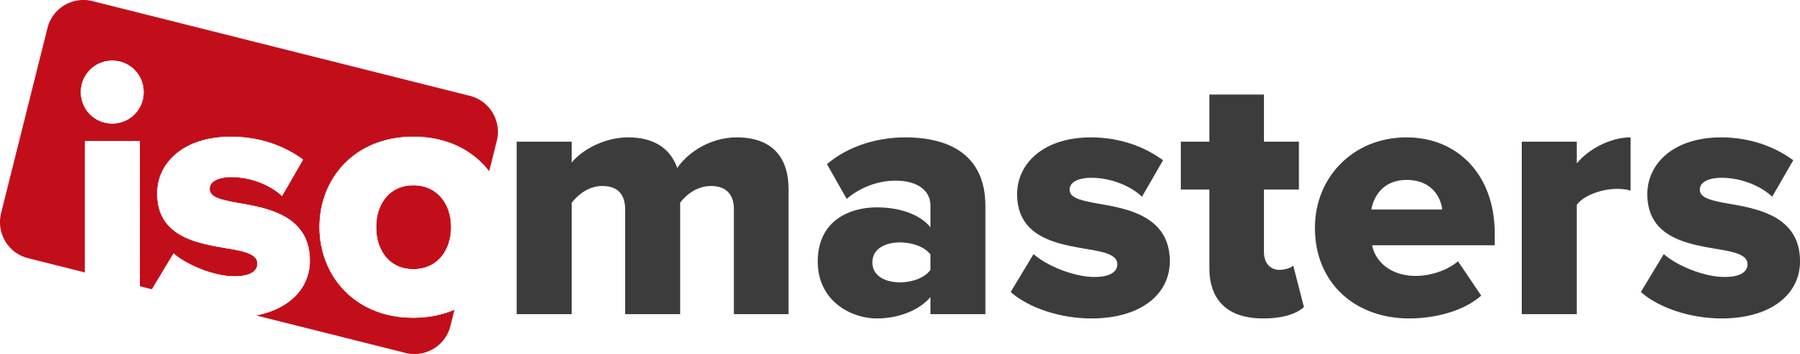 Logotype ISOMASTERS